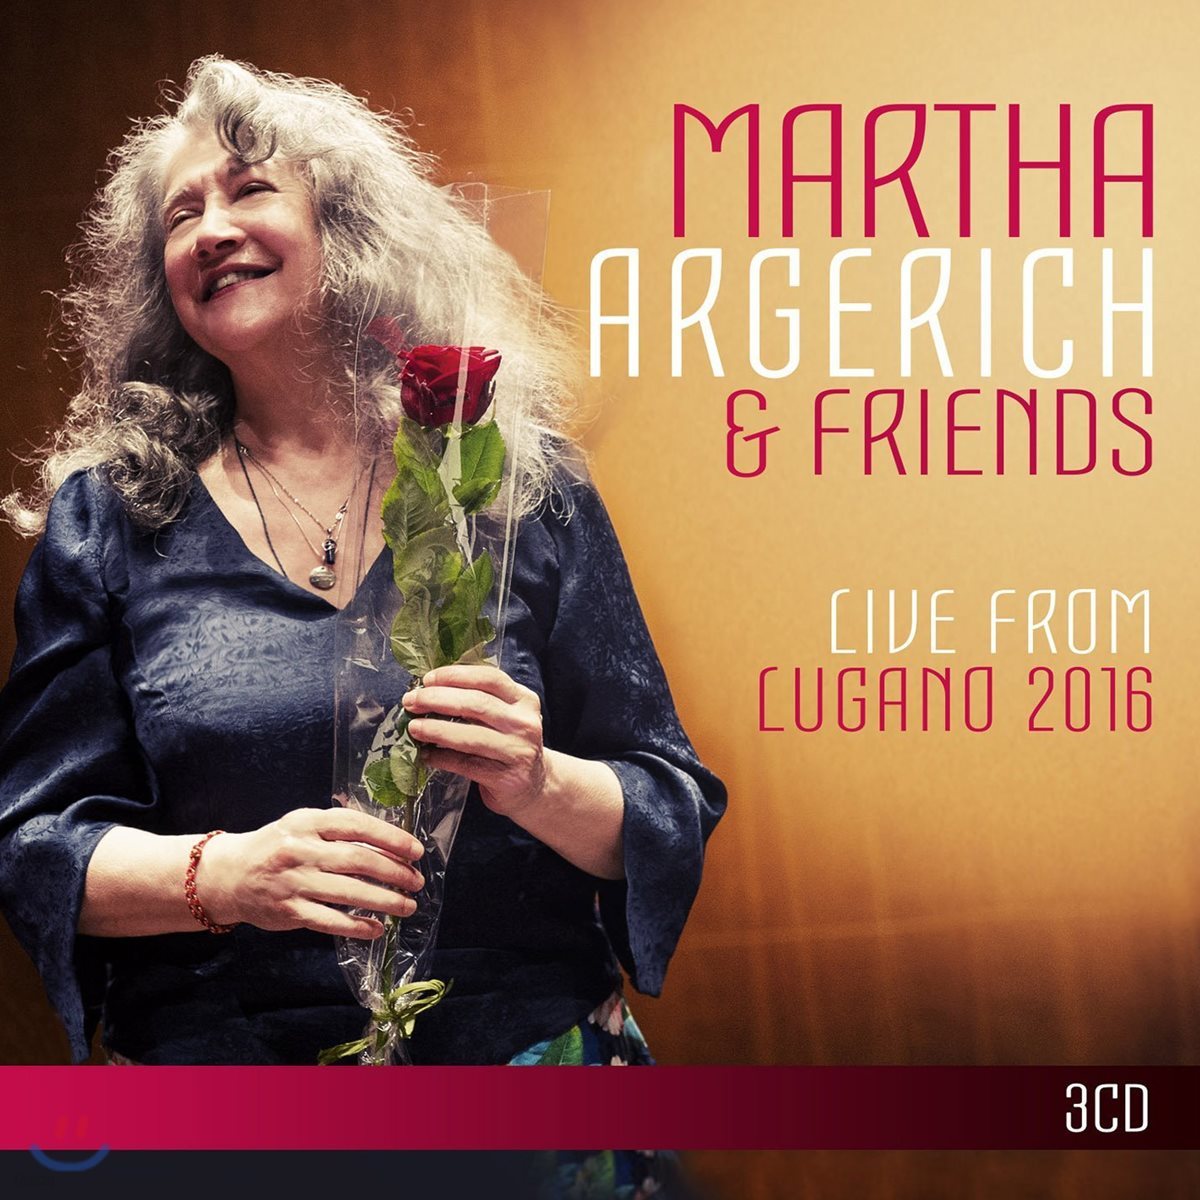 Martha Argerich &amp; Friends 마르타 아르헤리치와 친구들 - 루가노 페스티벌 2016 (Live from Lugano Festival 2016)